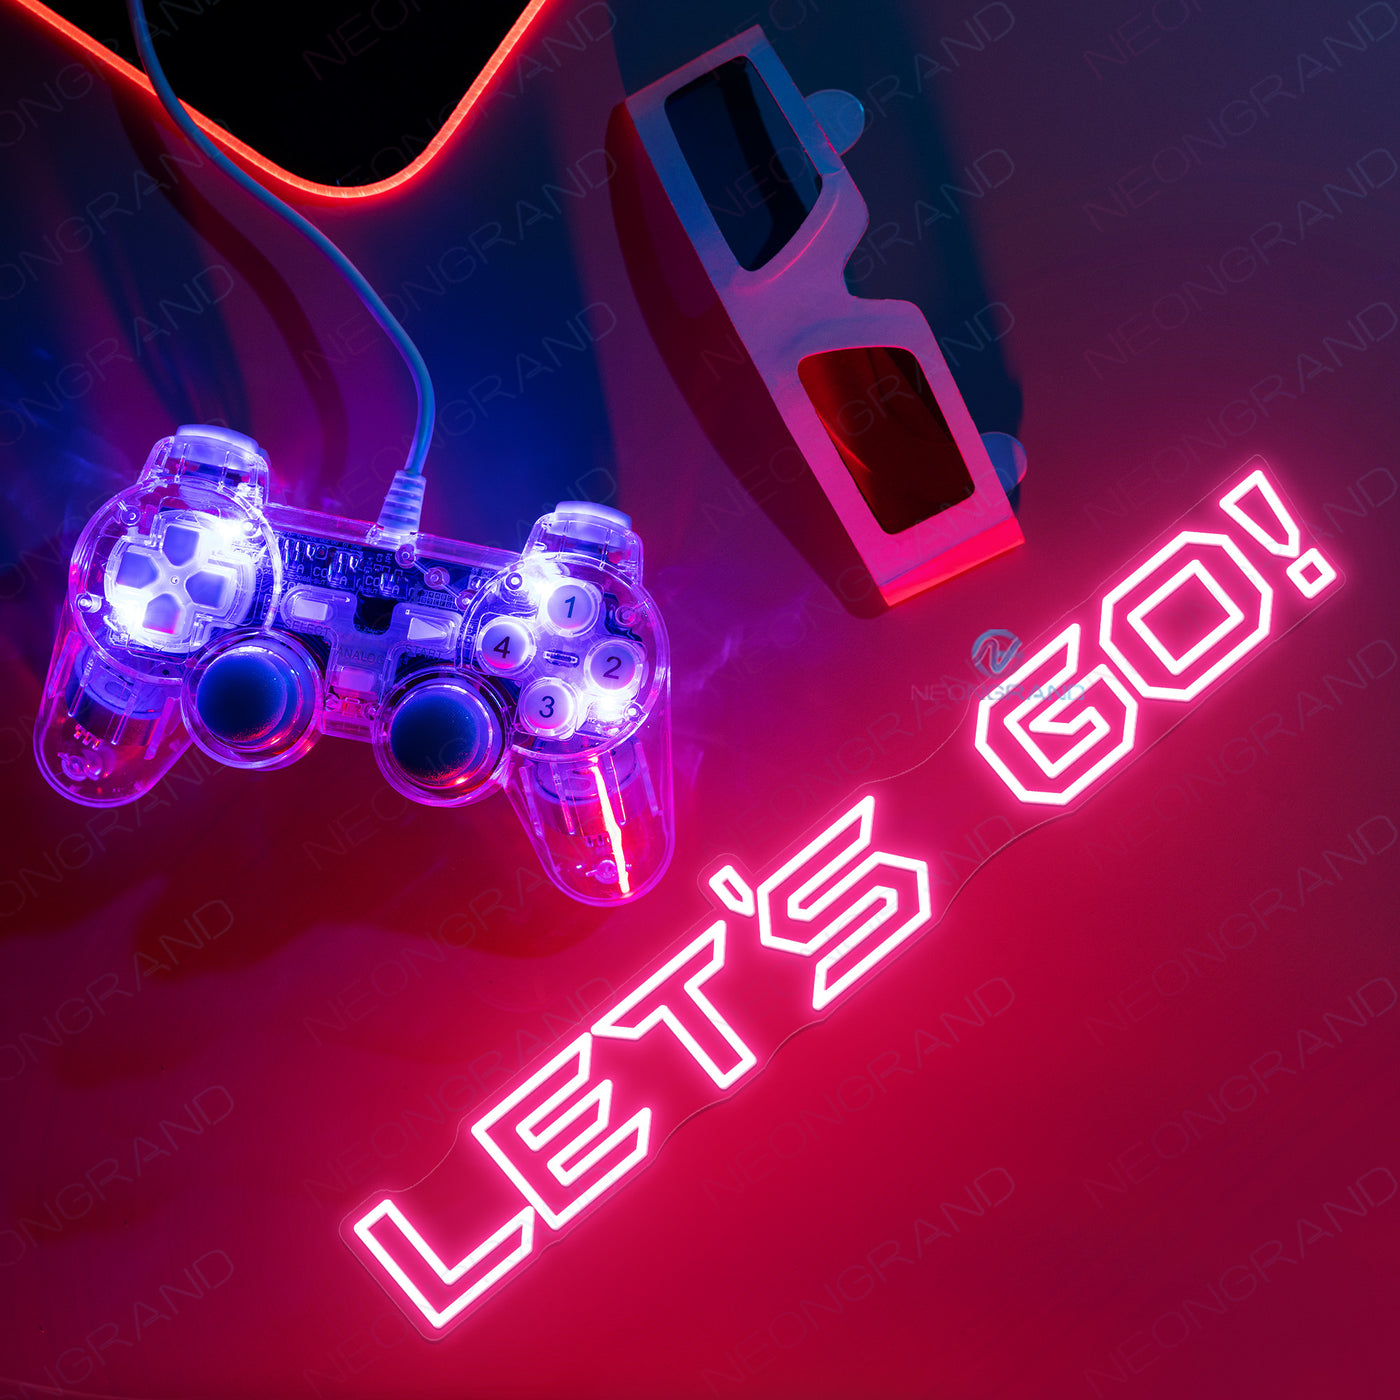 Let's Go Neon Game Sign Led Light